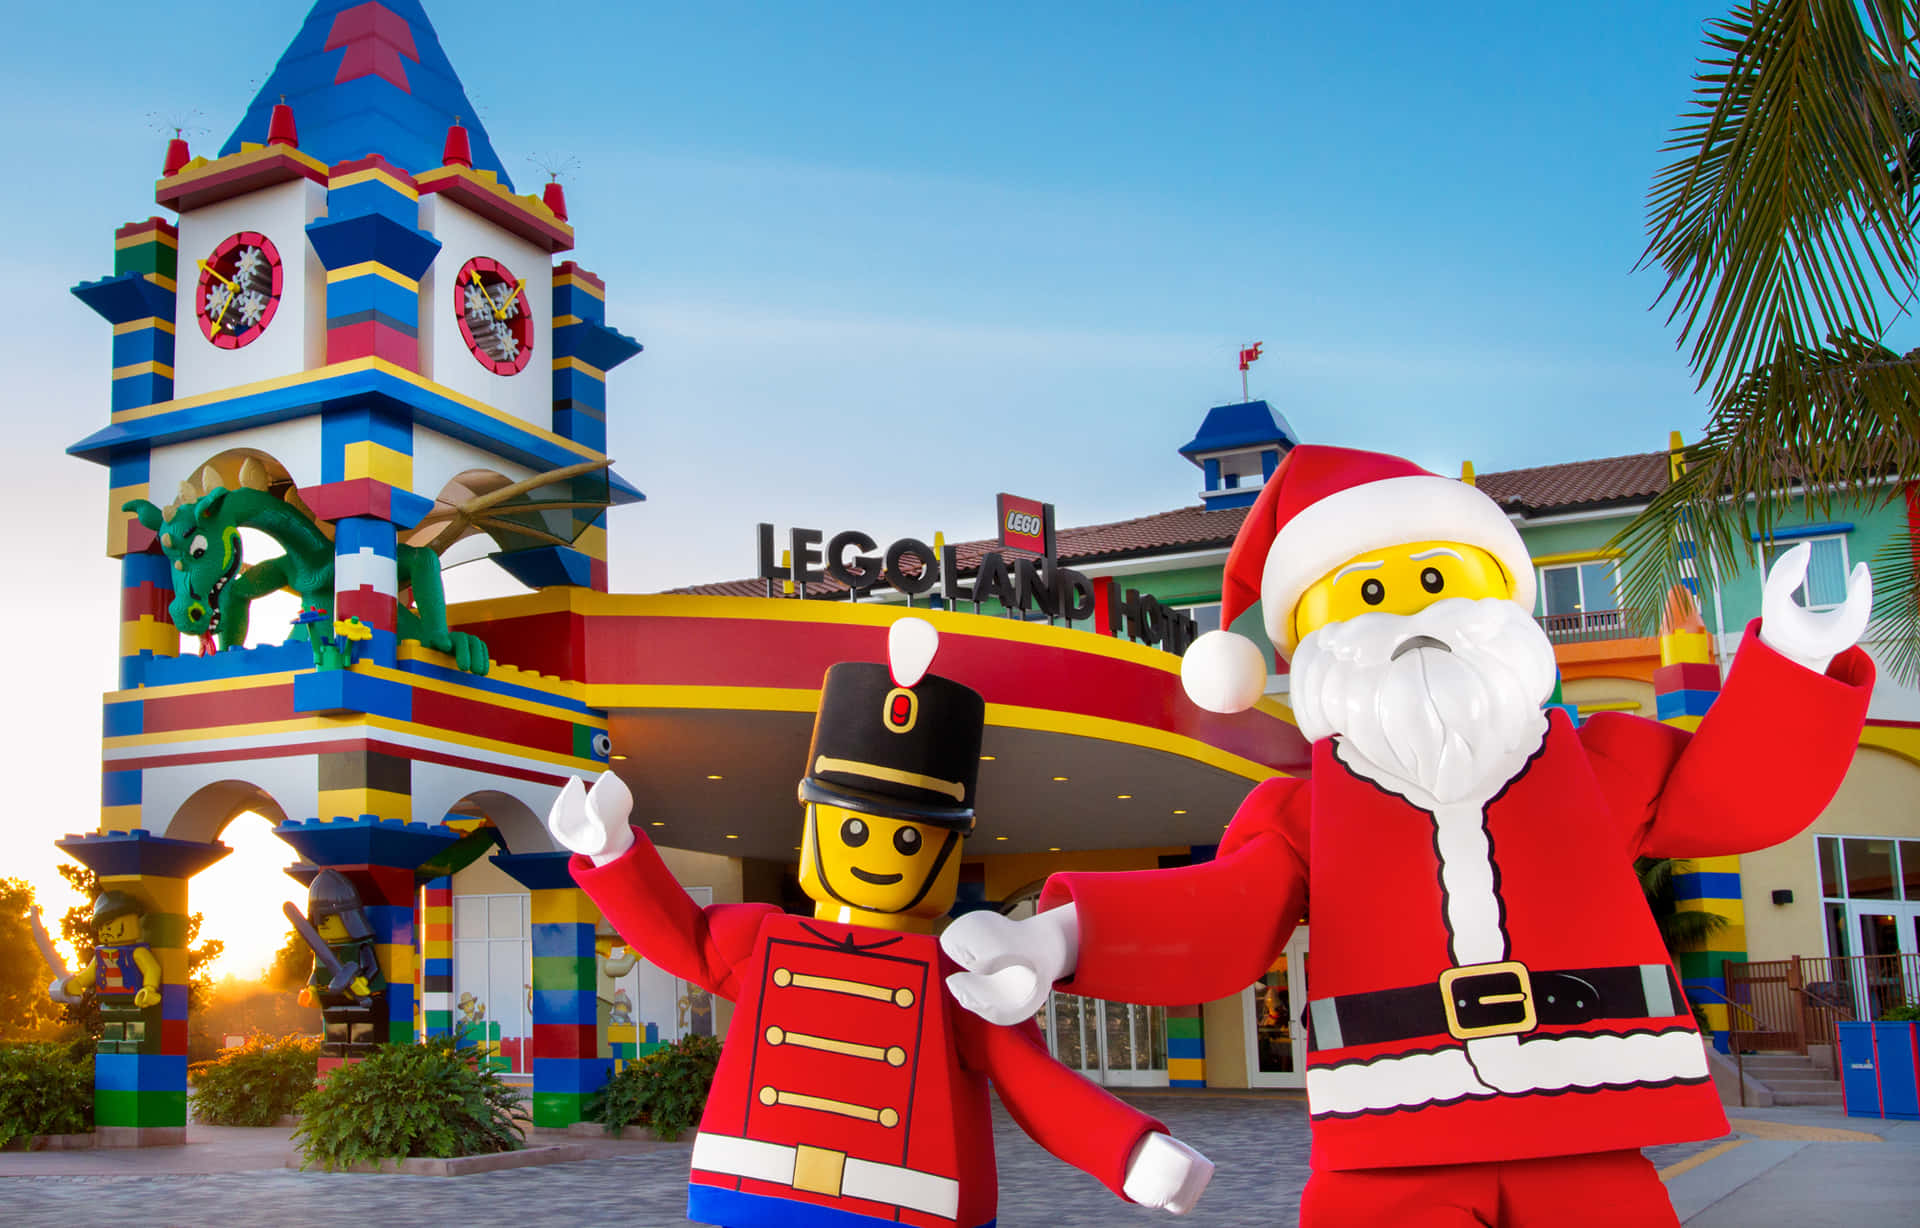 Explore the magical worlds of Legoland!